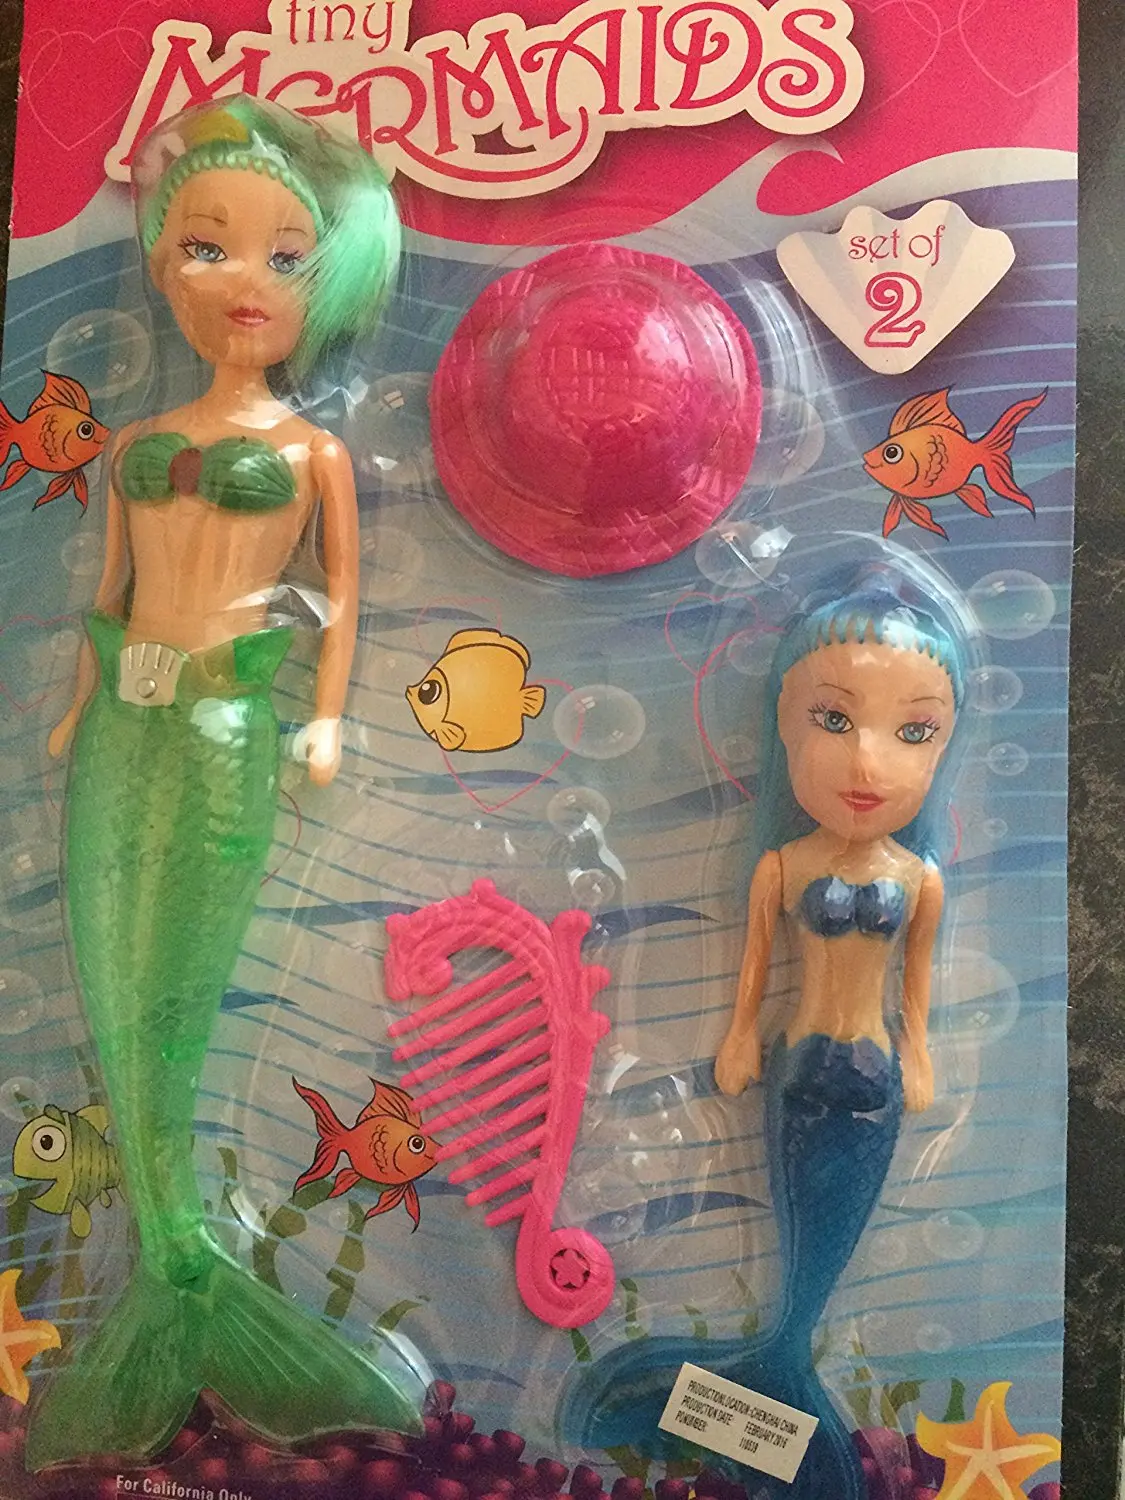 cheap mermaid dolls